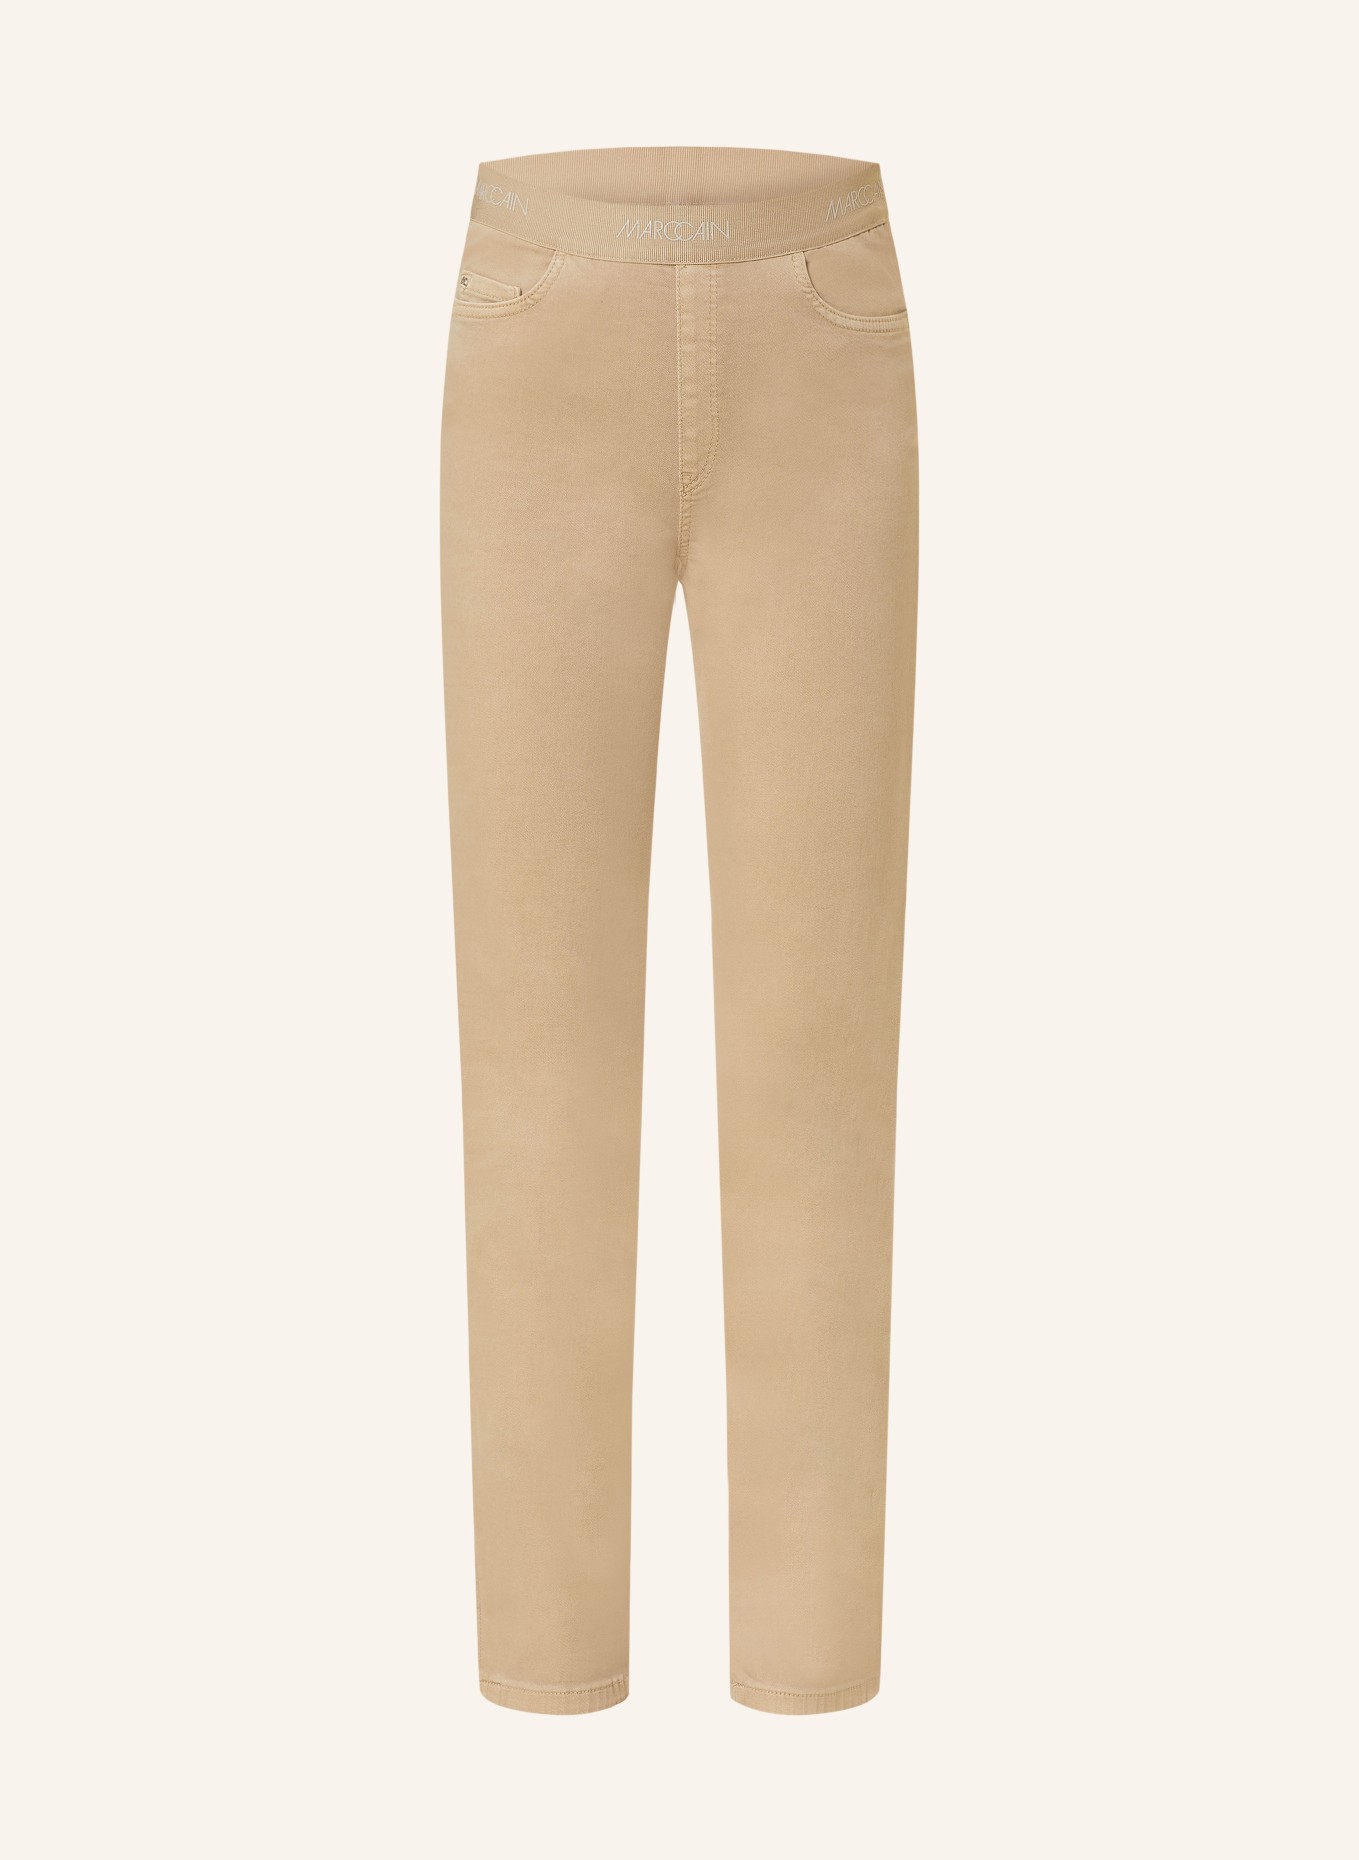 MARC CAIN Jeans, Farbe: 610 light stone (Bild 1)